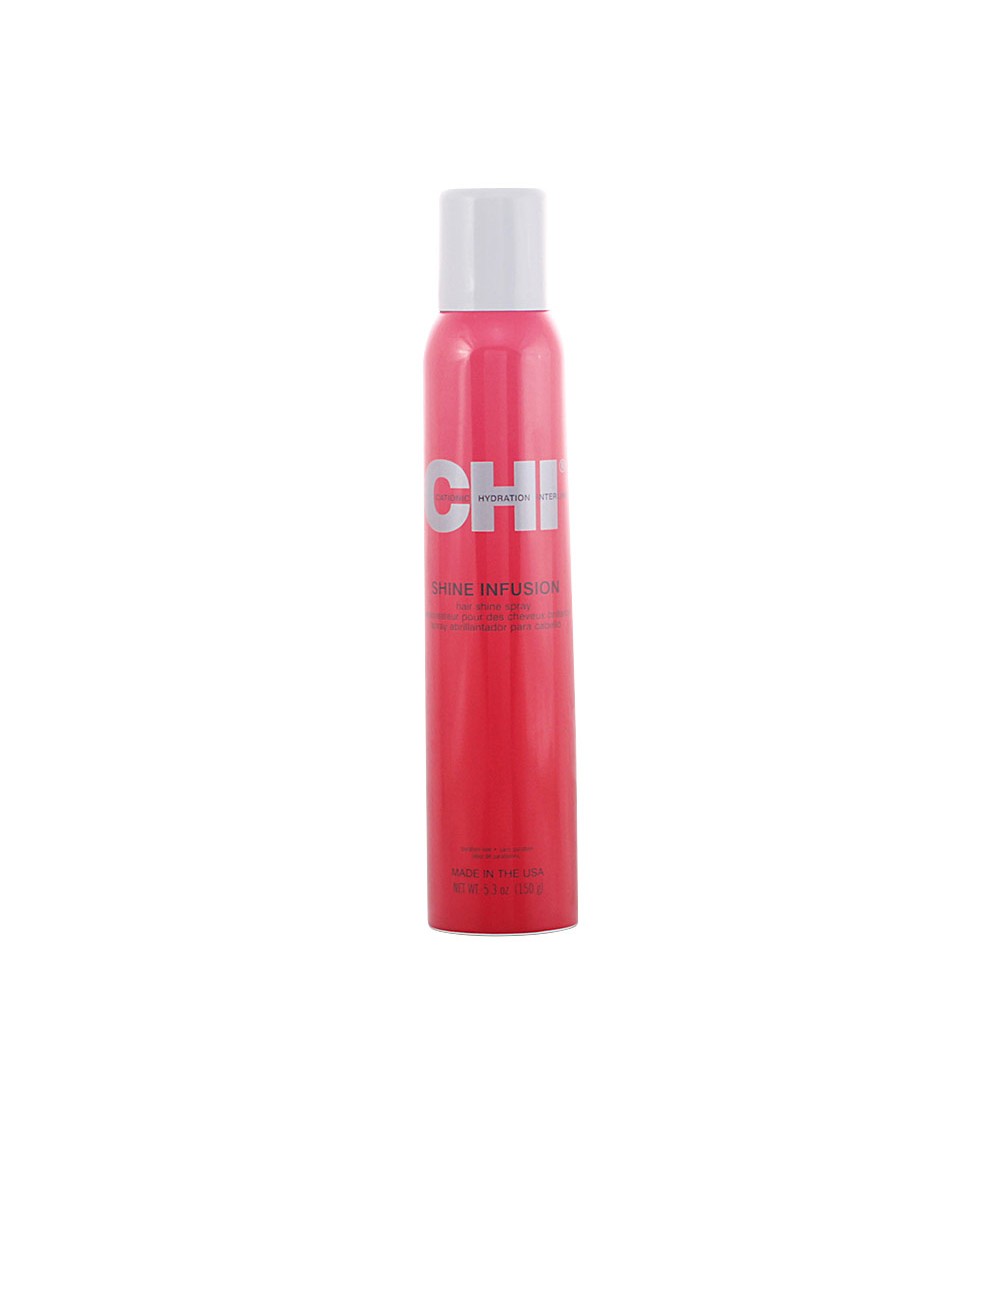 CHI SHINE INFUSION Spray brillance pour cheveux 150 gr